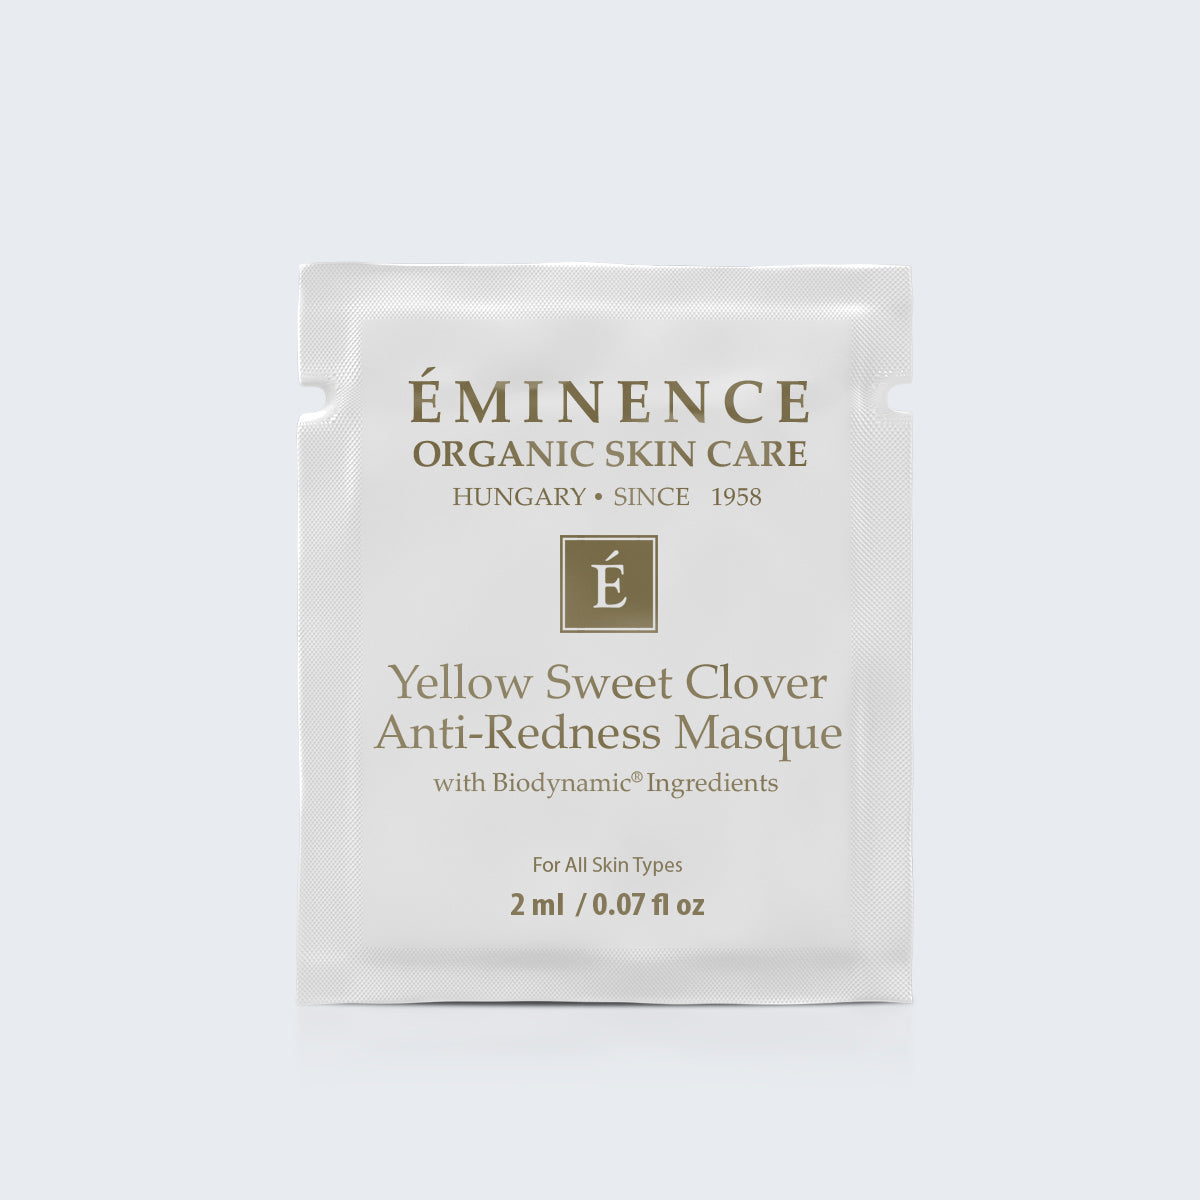 Eminence Organics Yellow Sweet Clover Anti-Redness Masque Foil Sample